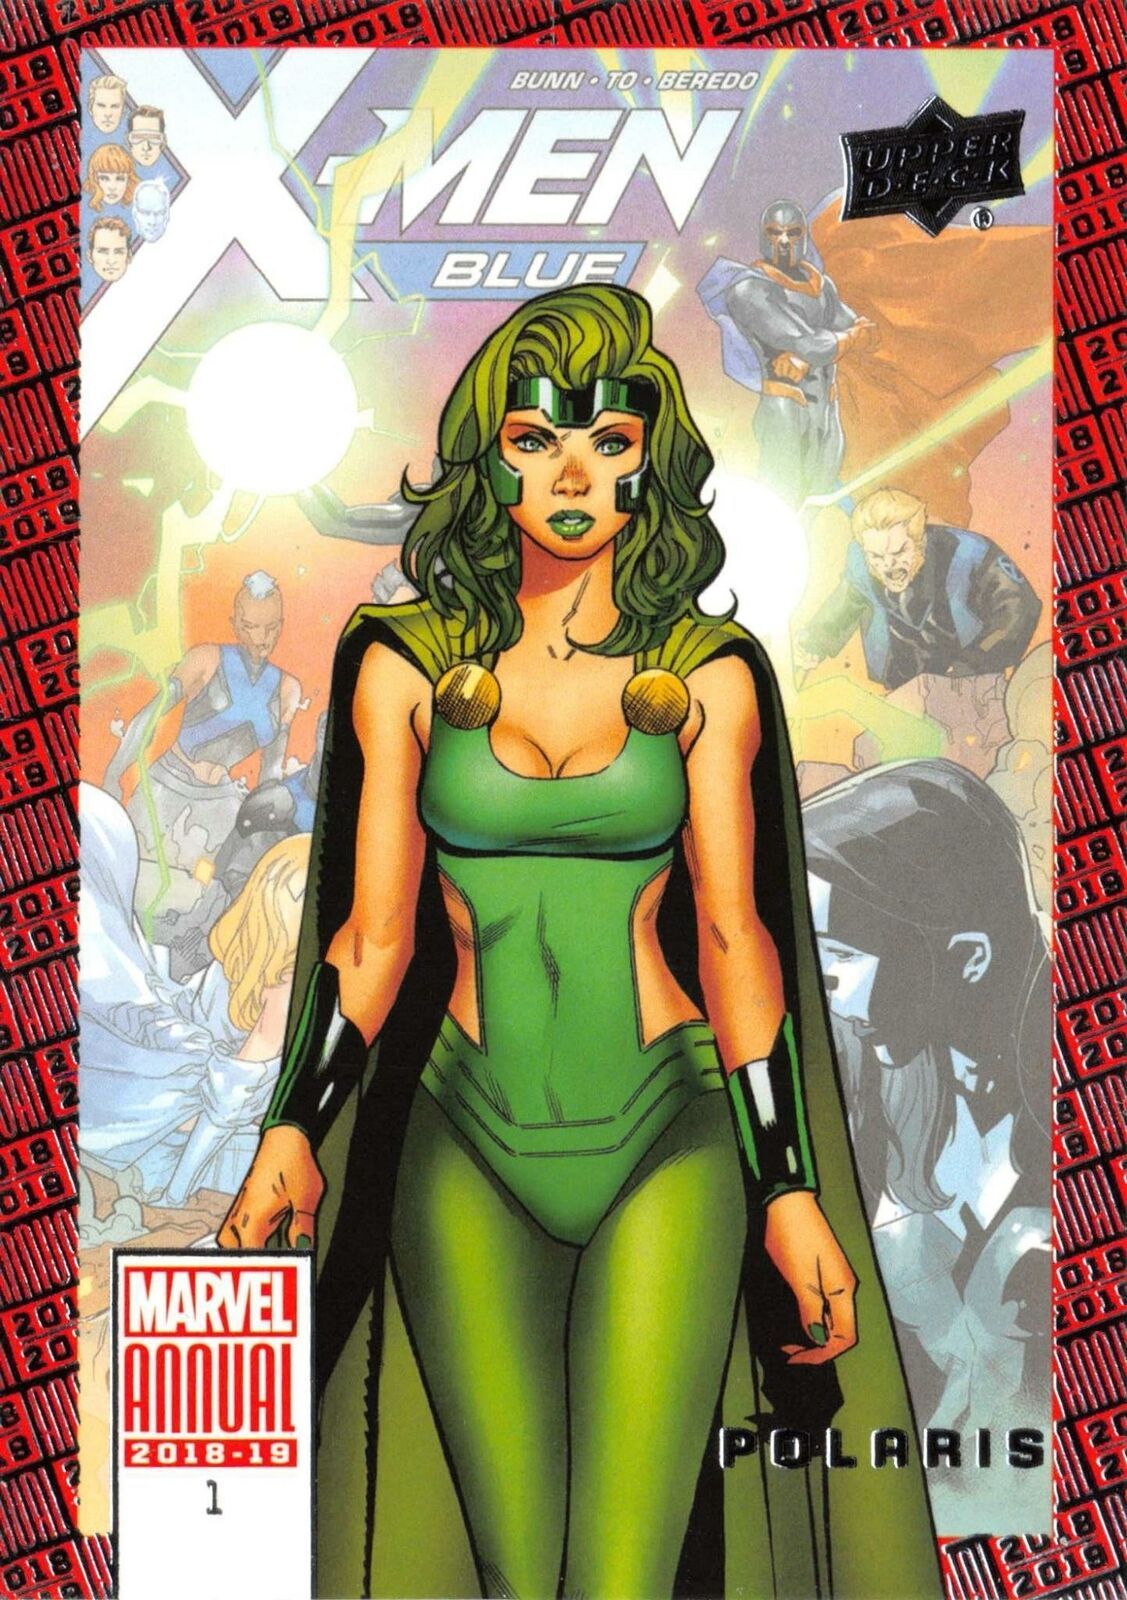 2019 2018 Upper Deck  Marvel Annual Comic Cover CC18 card